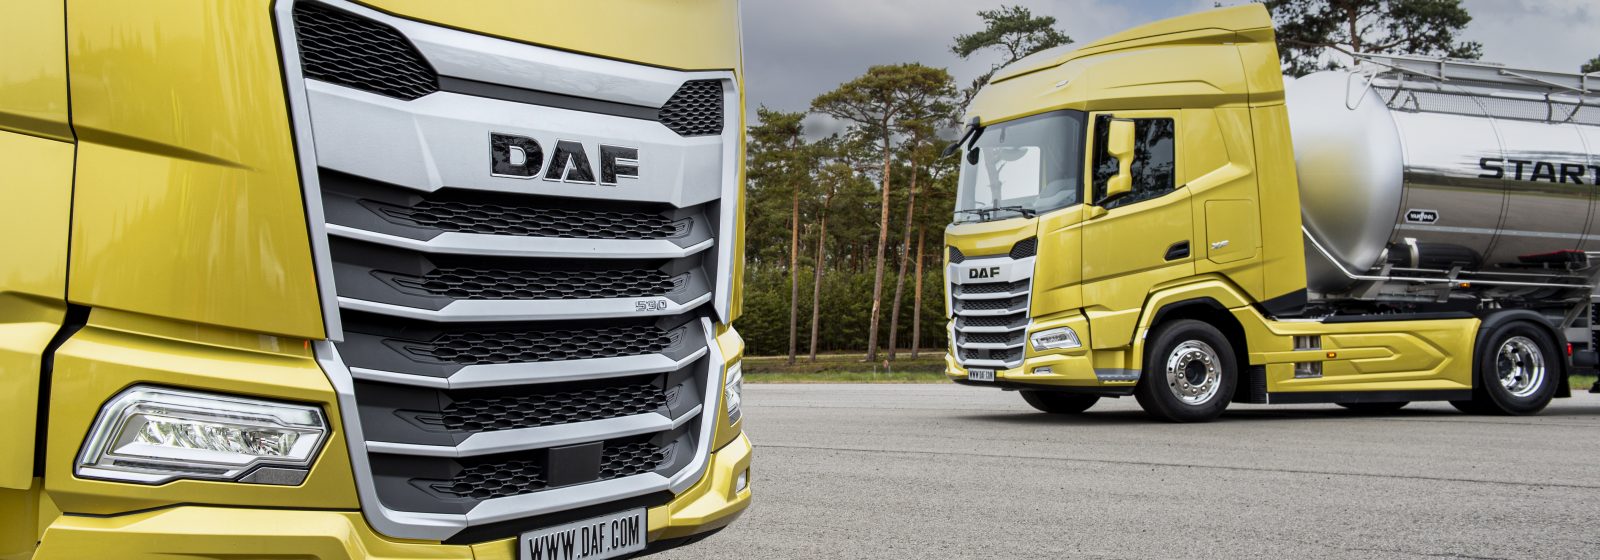 DAF trucks 2021